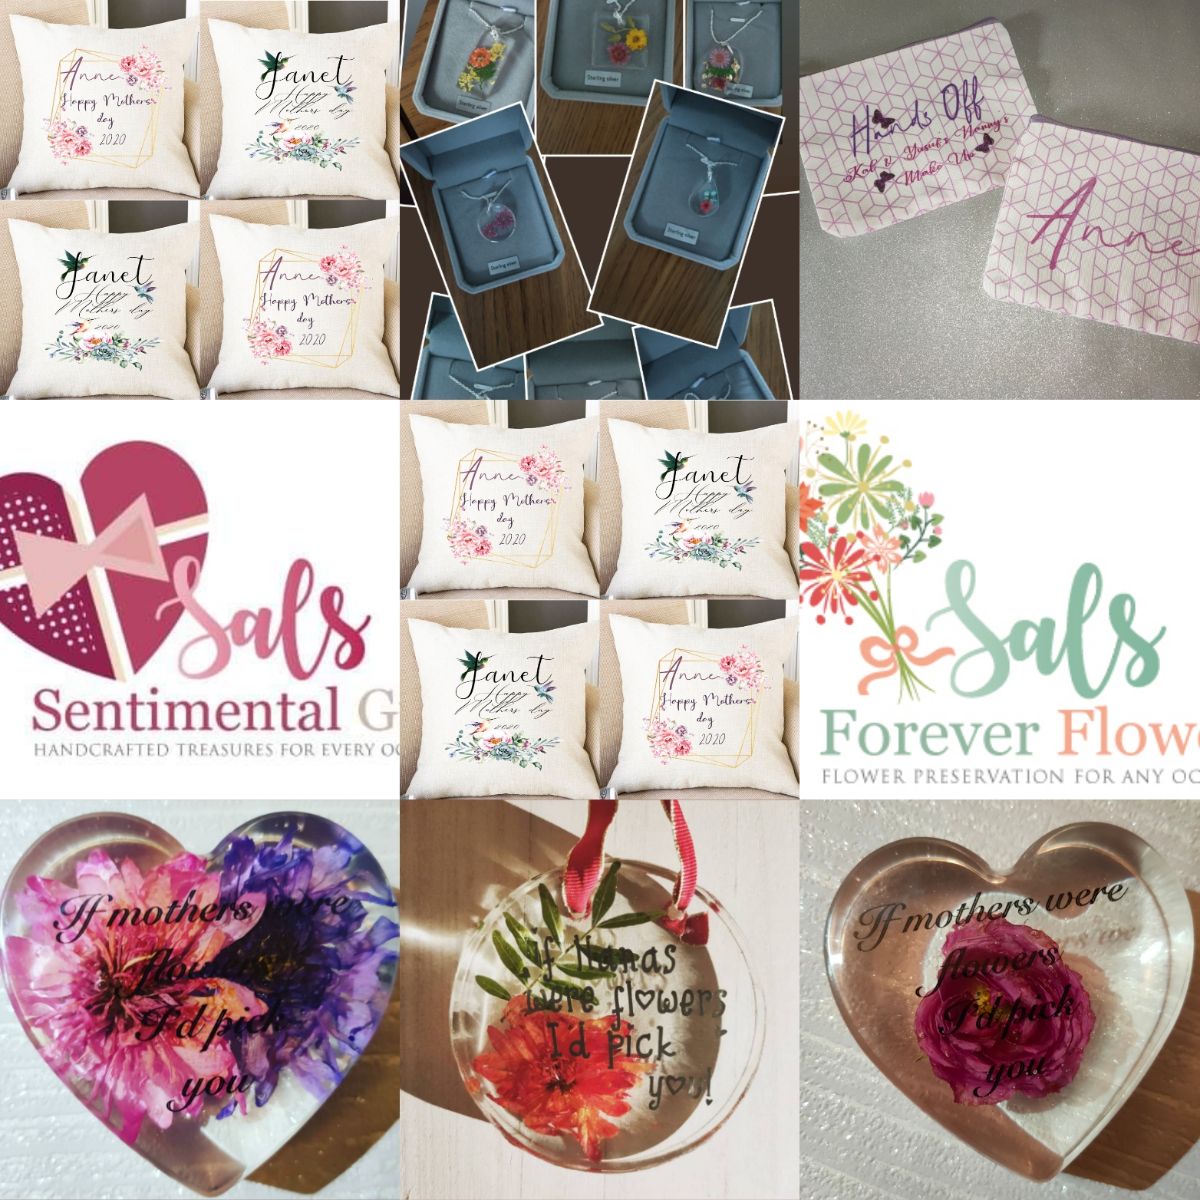 Sals Sentimental Gifts / Sals forever flowers -Image-36